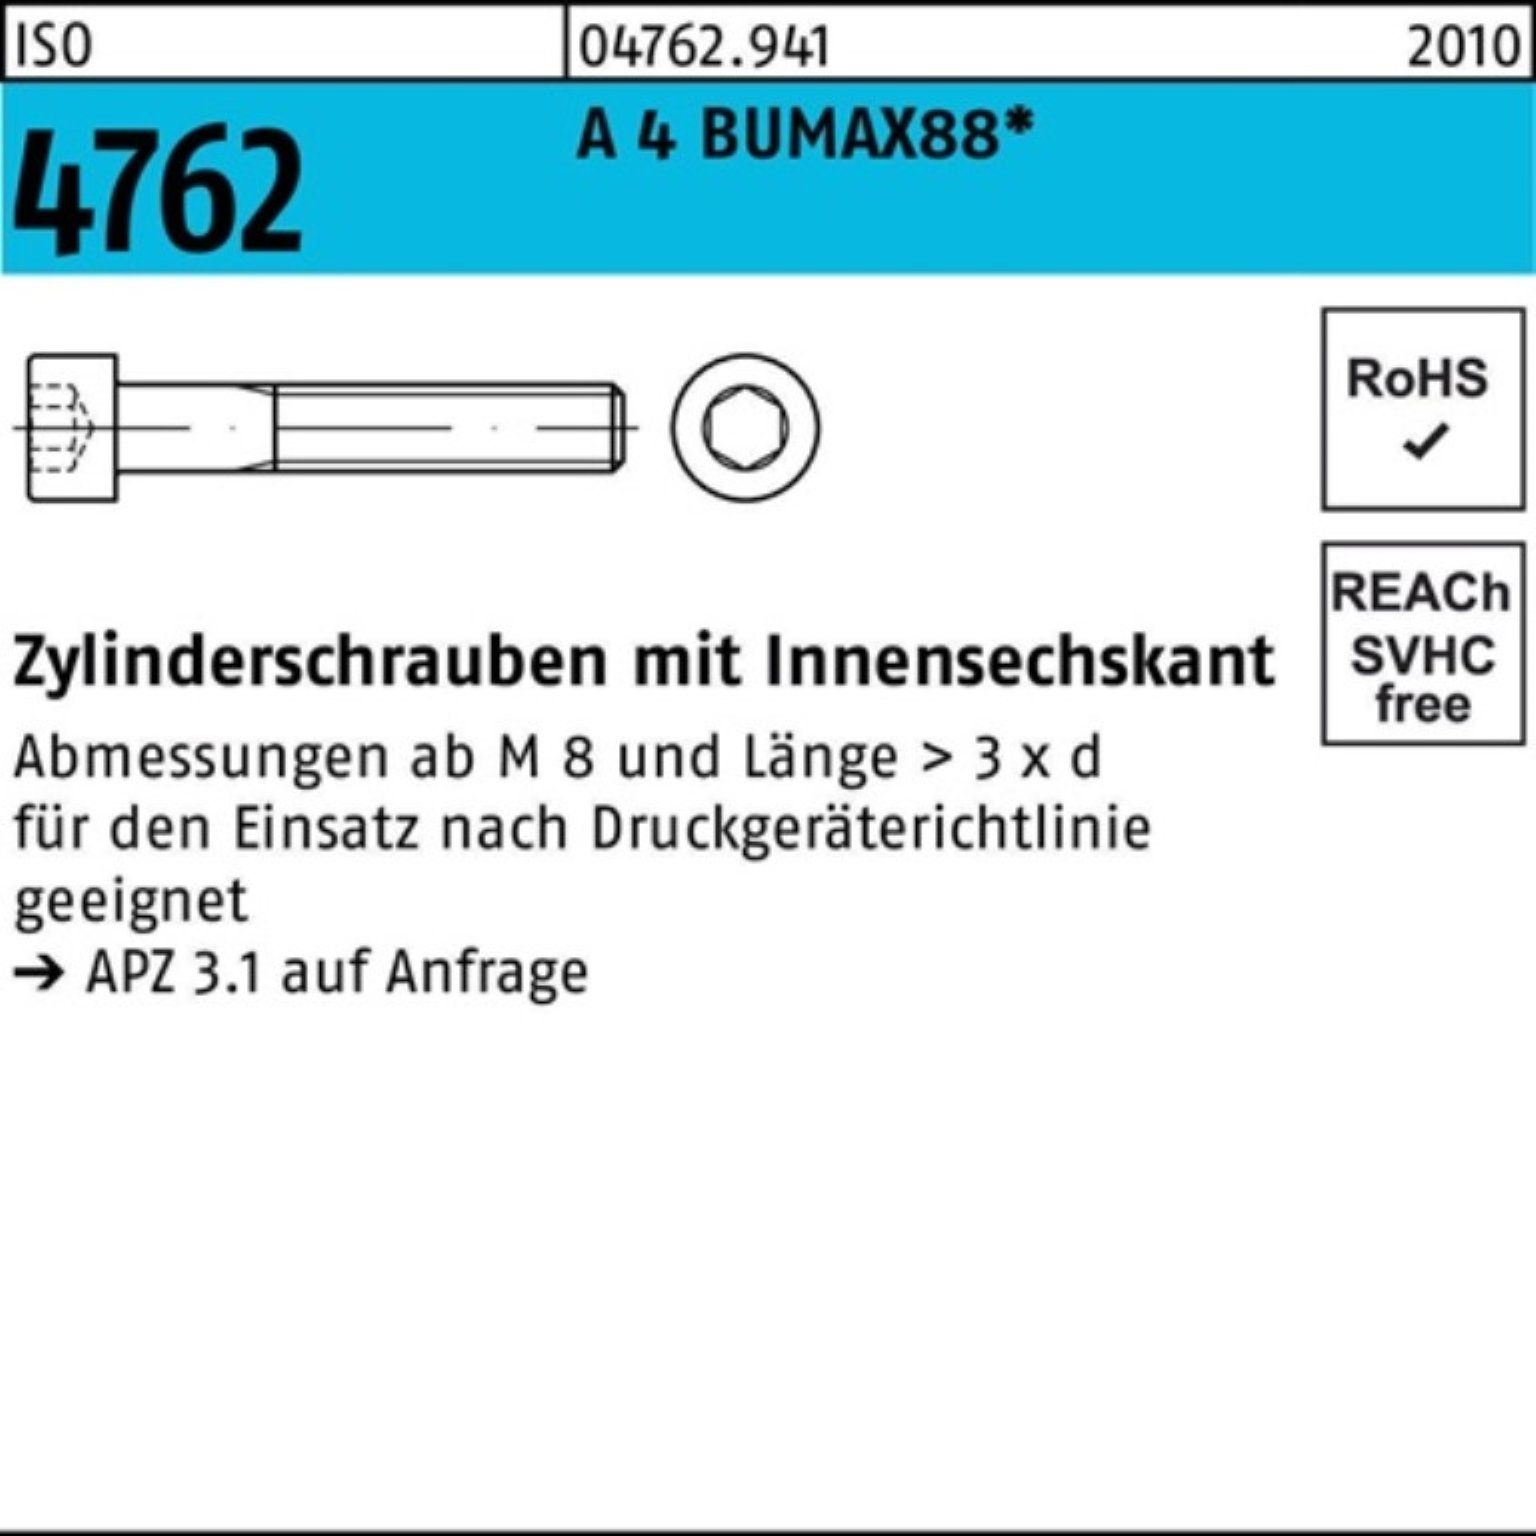 Bufab Zylinderschraube 200er Pack Zylinderschraube ISO 4762 Innen-6kt M4x 6 A 4 BUMAX88 200 S